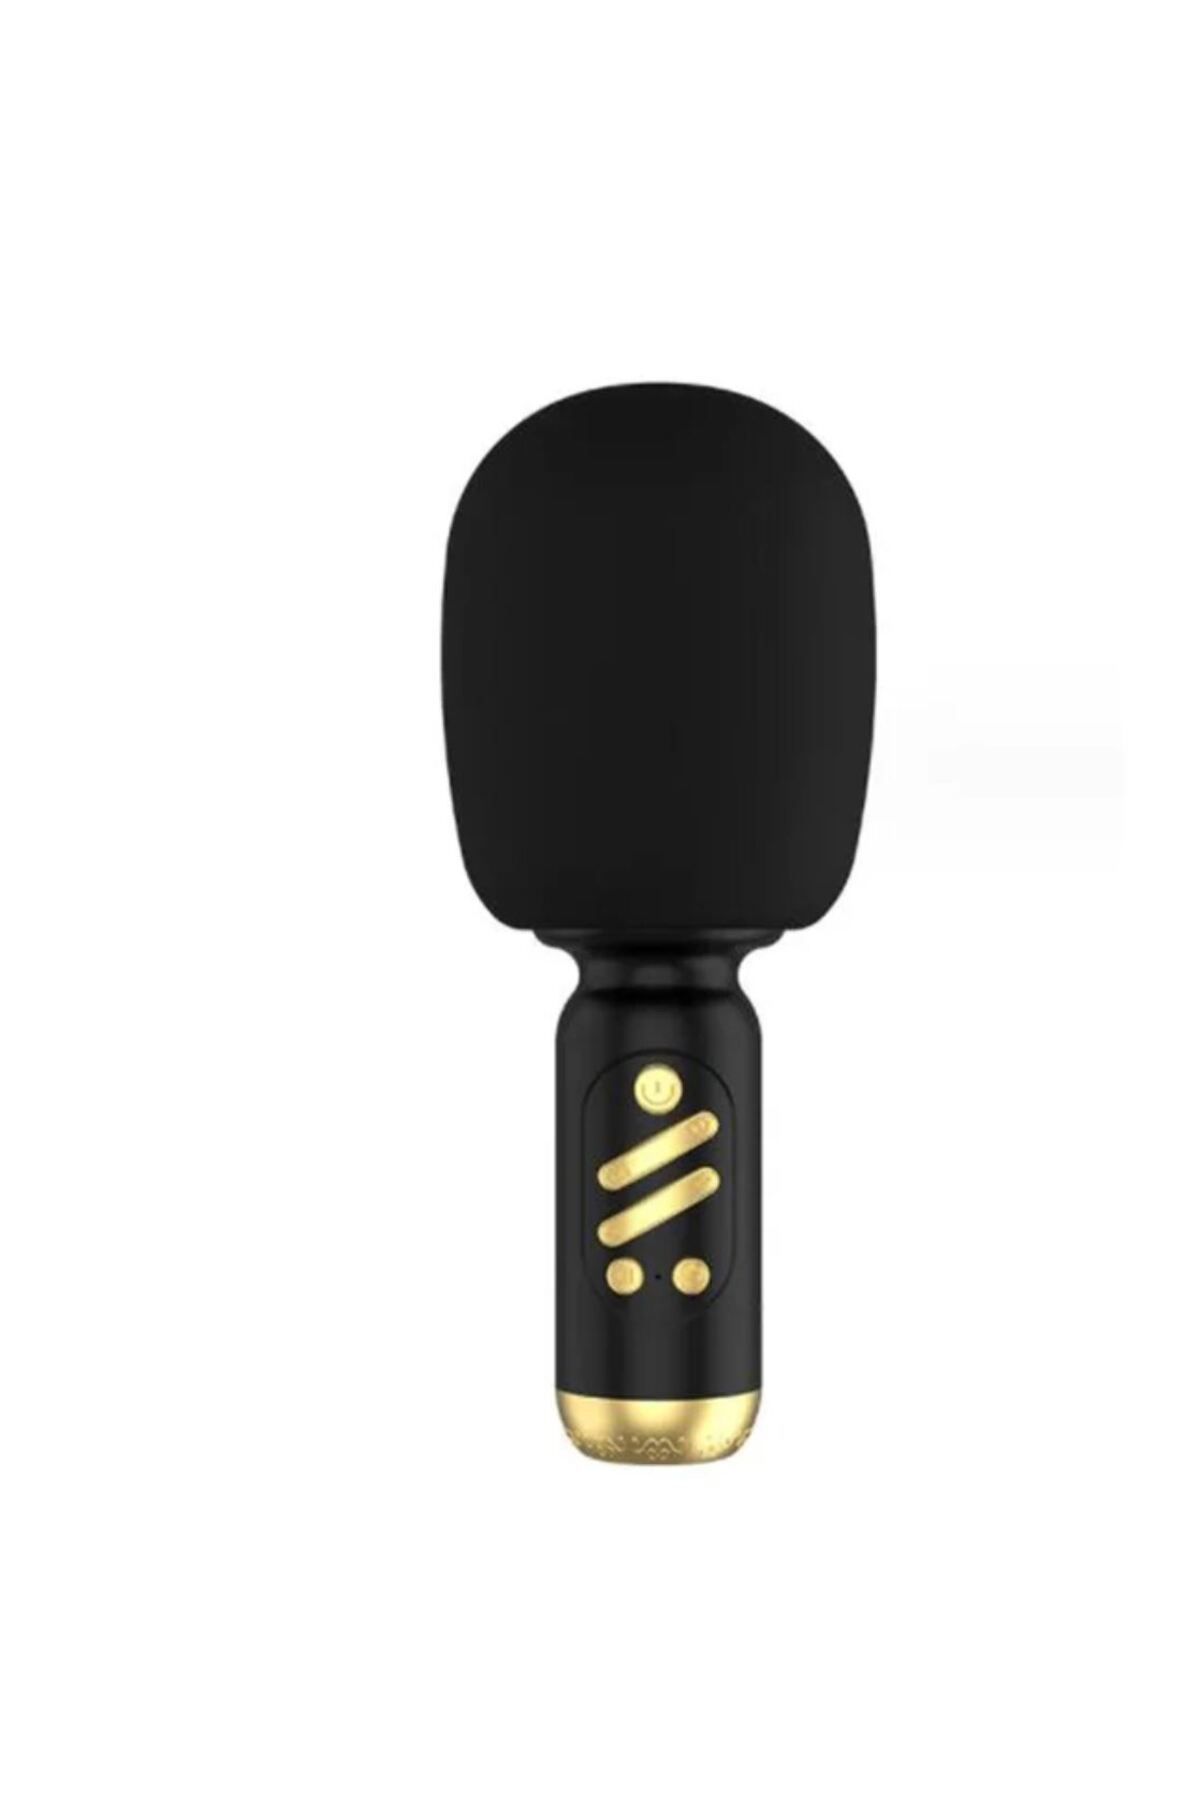 ROMİX Bluetooth Karaoke Mikrofon Kablosuz Taşınabilir Hoparlör Efekt, Youtuber